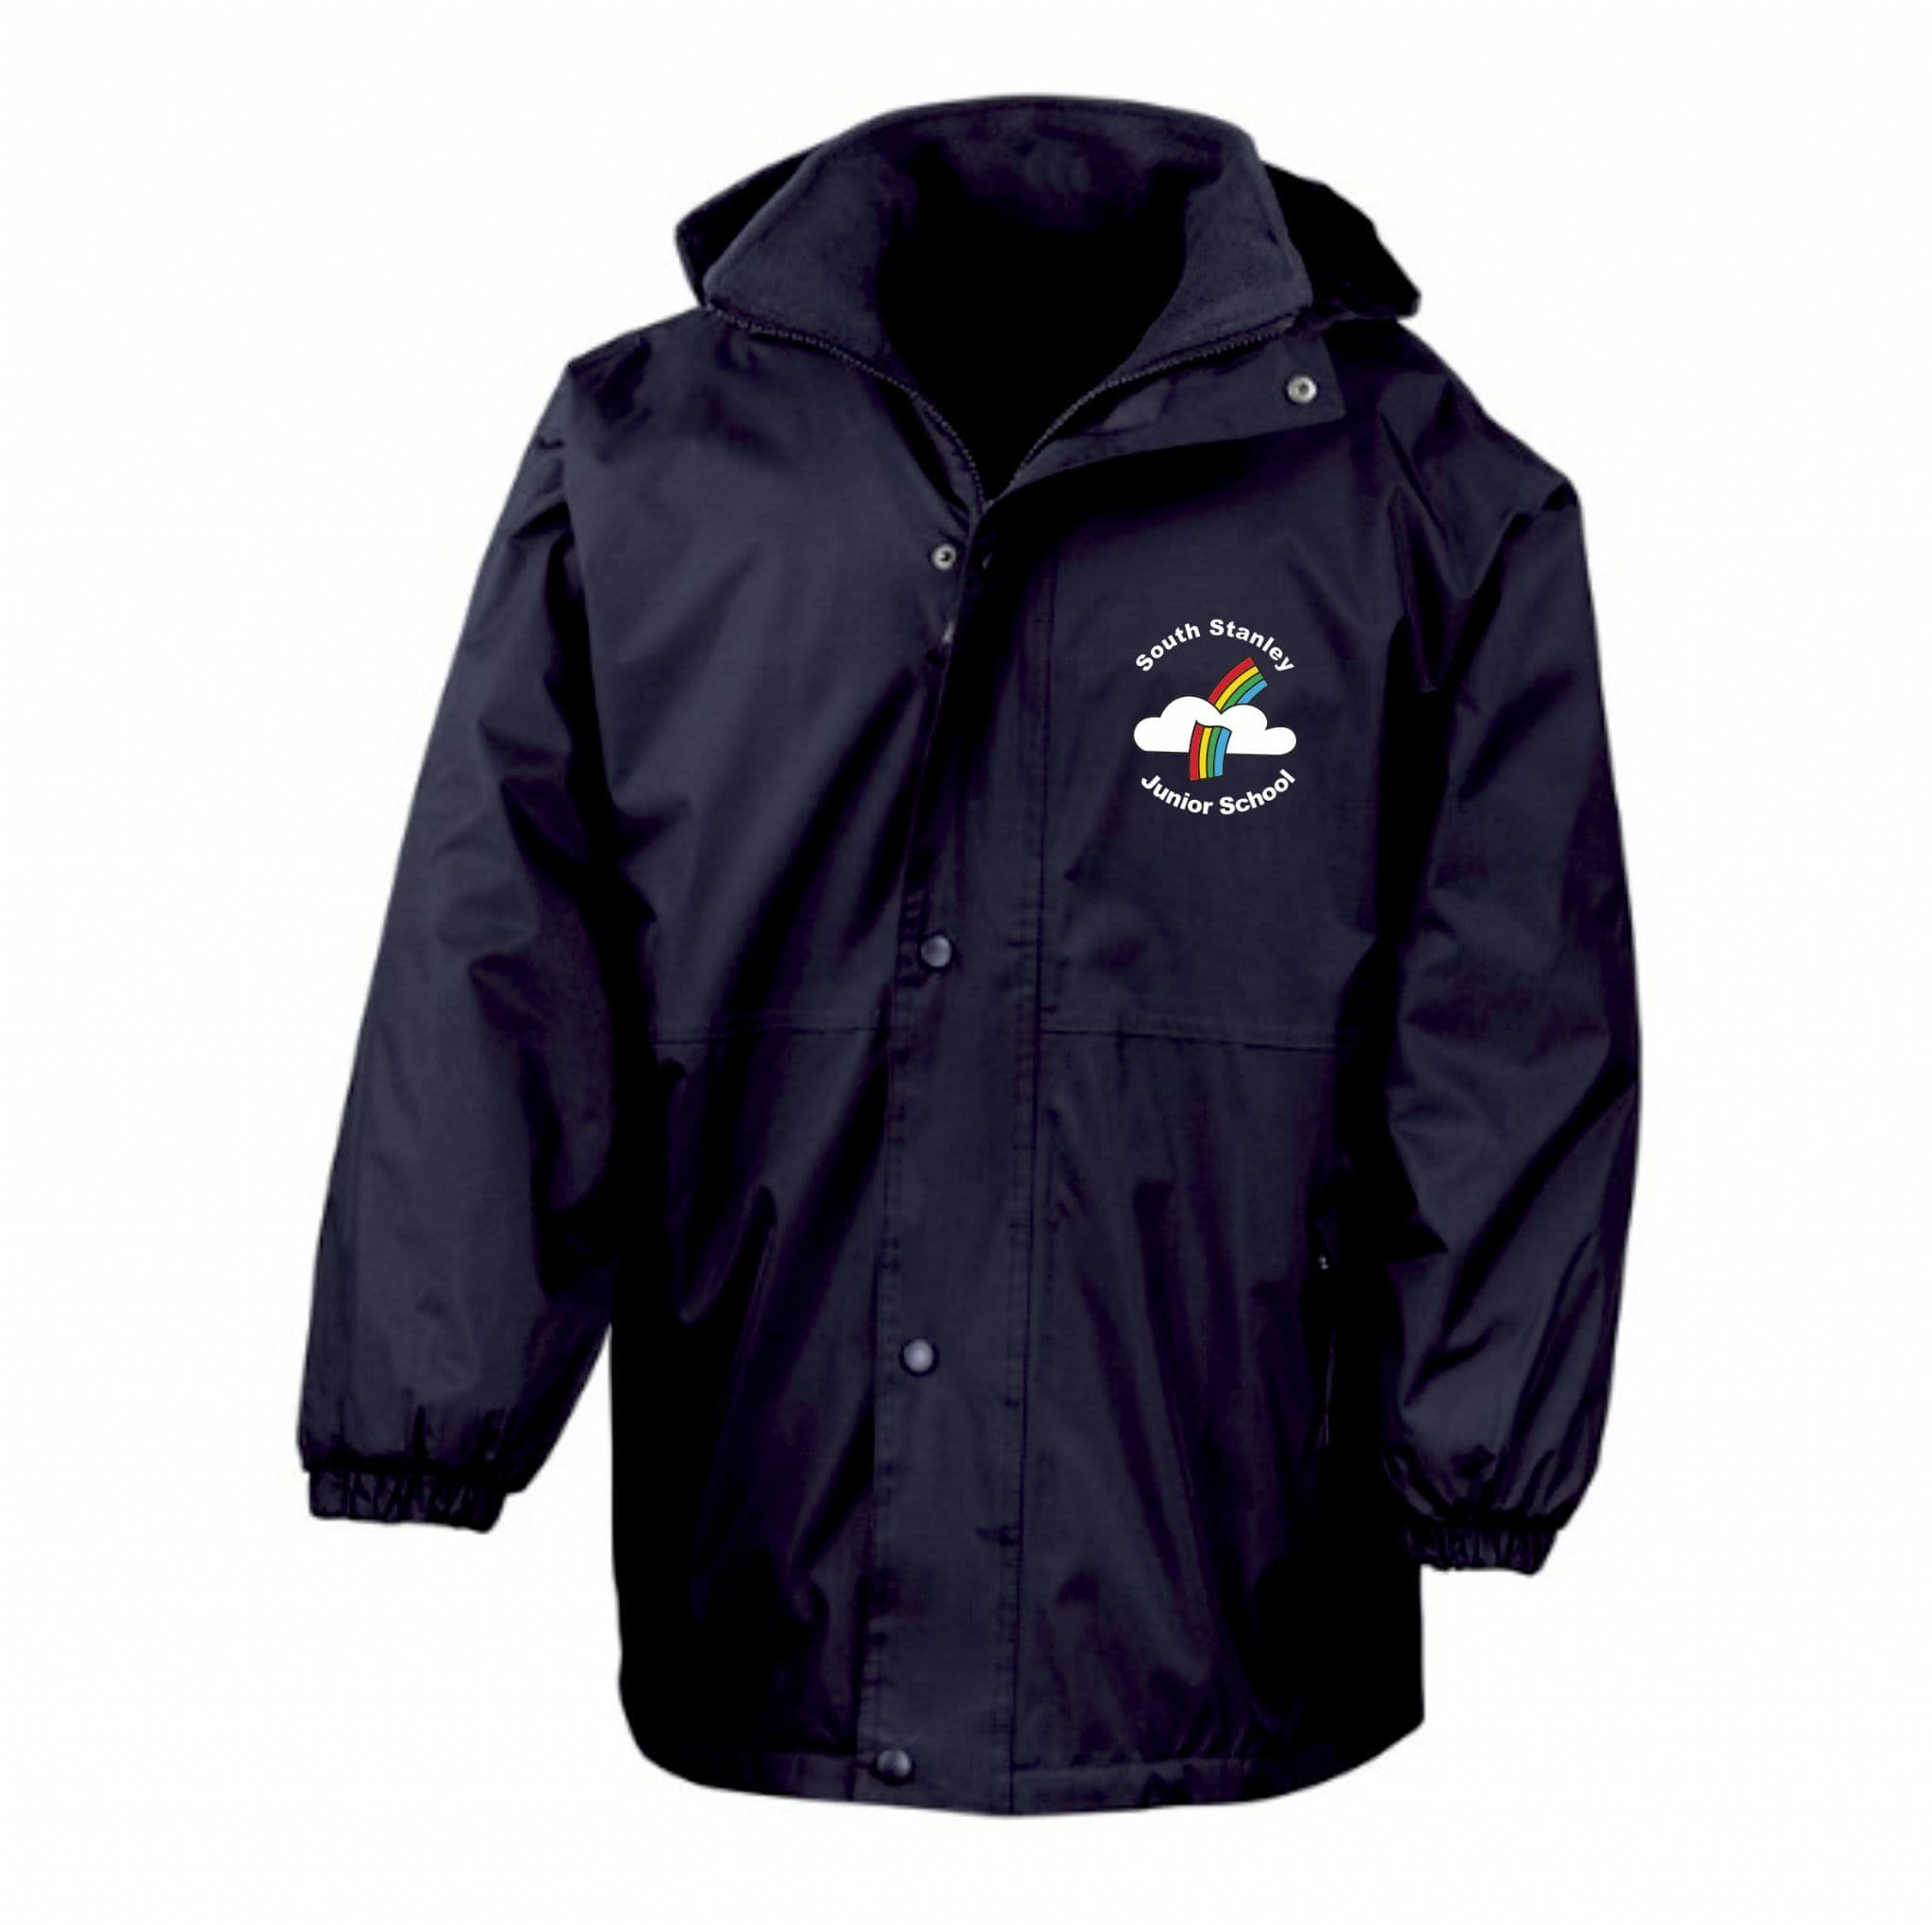 South Stanley Reversible Jacket R160J